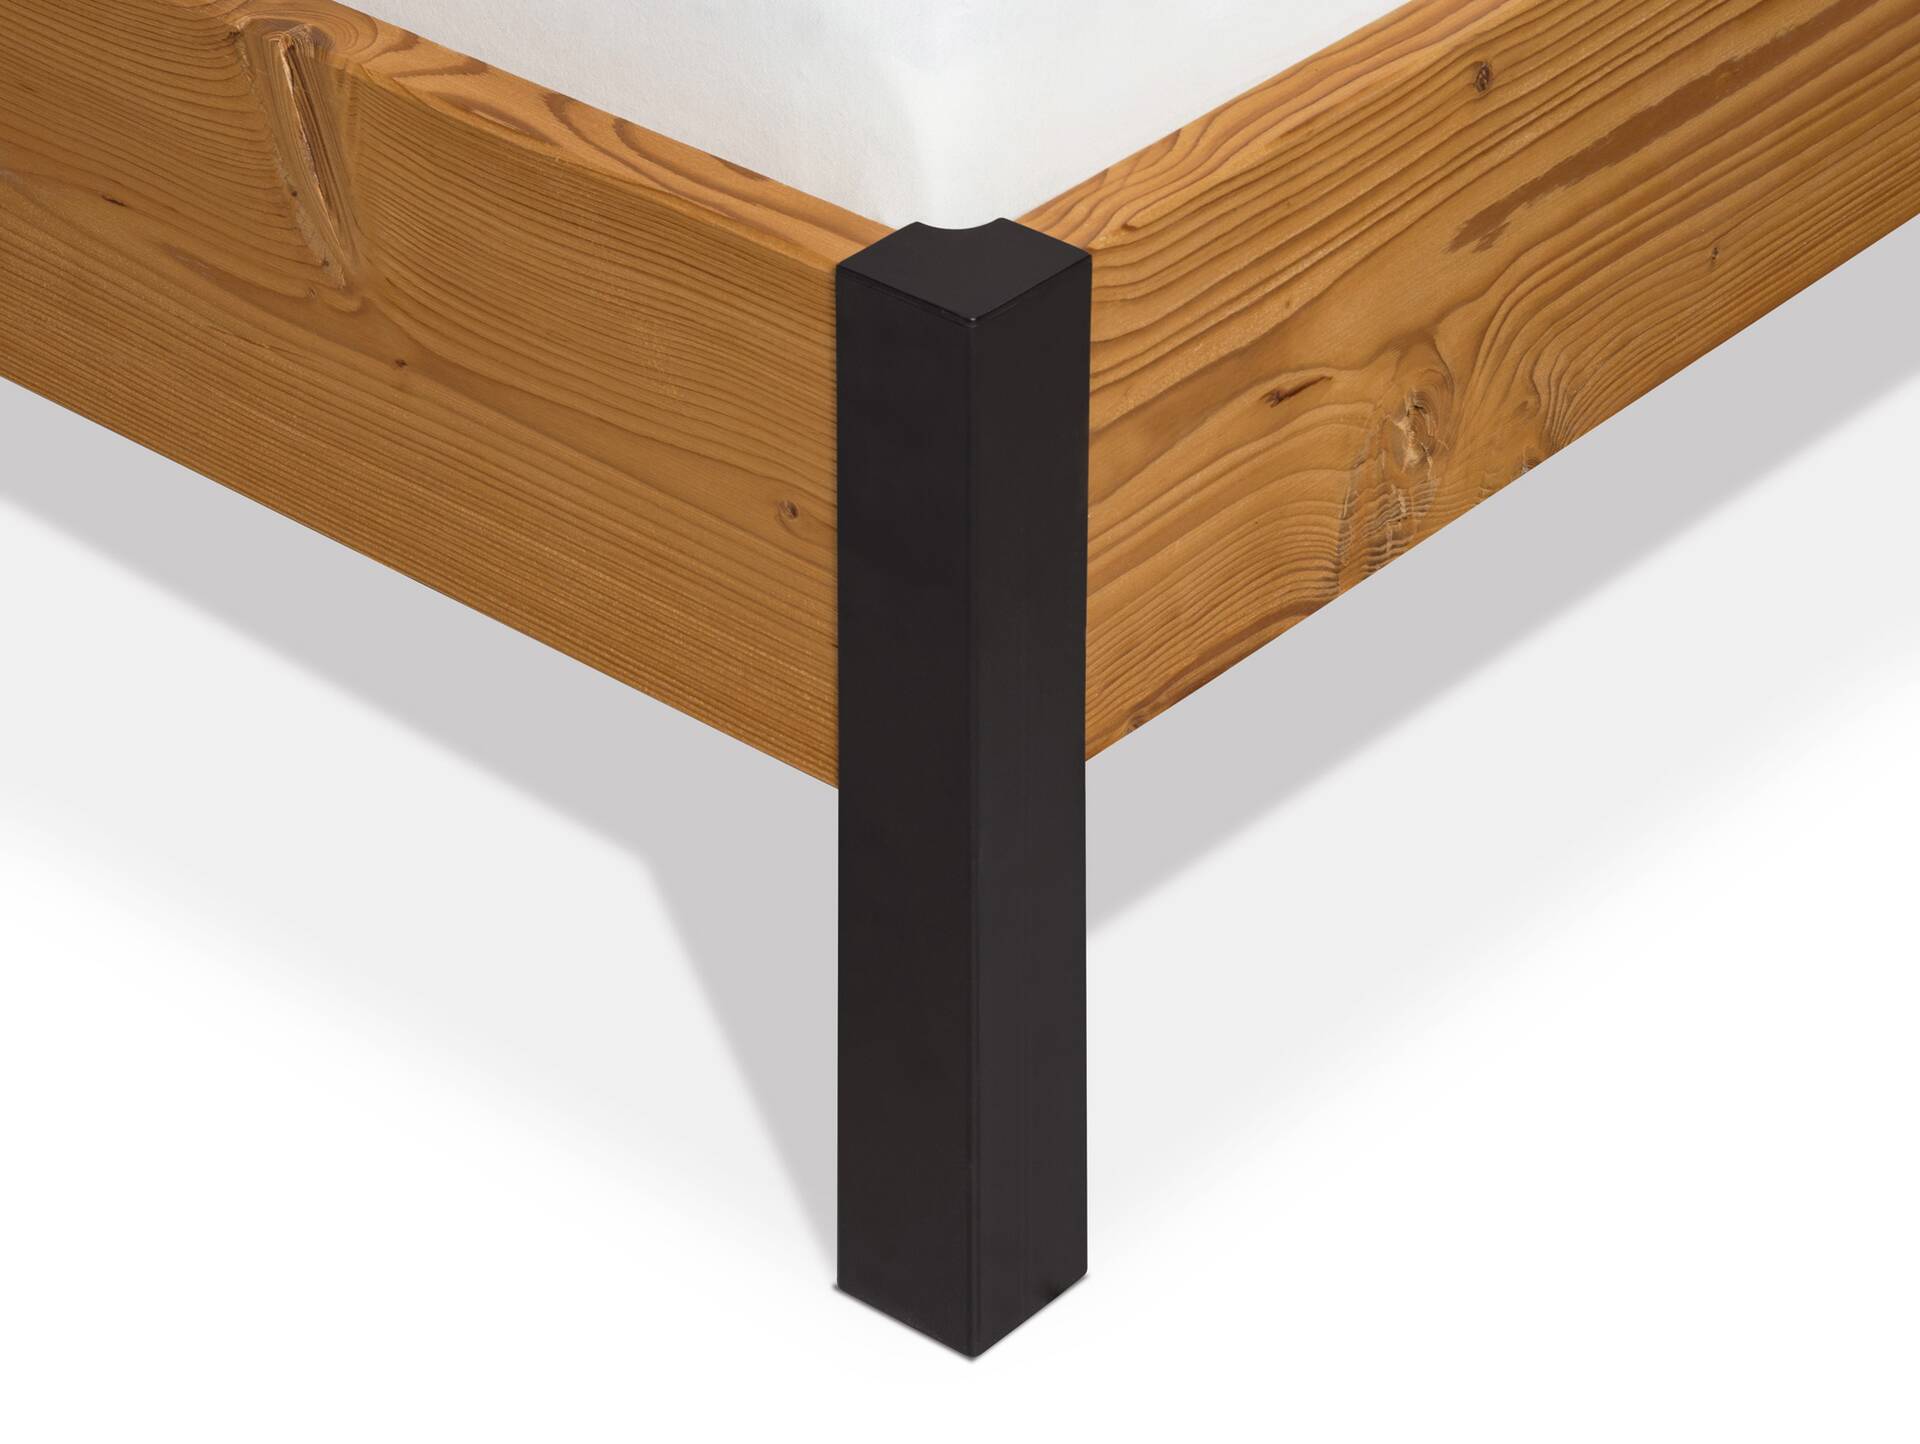 CURBY Bett Metallfuß, mit Kopfteil, Material Massivholz, rustikale Altholzoptik, Fichte 180 x 200 cm | natur